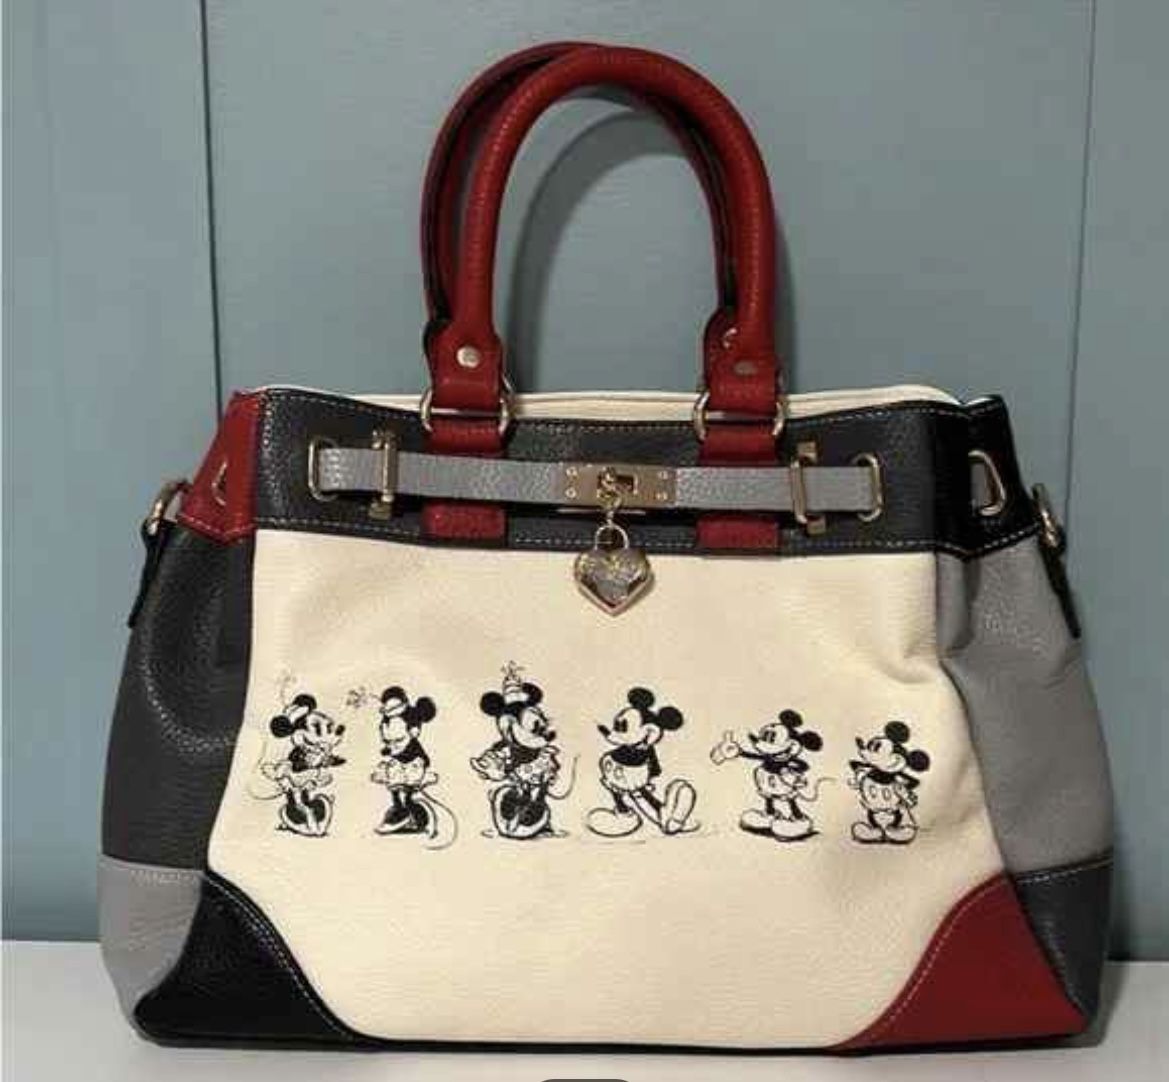 *** $80 -Brand new *** Mickey and Minnie Love Story Handbag. I